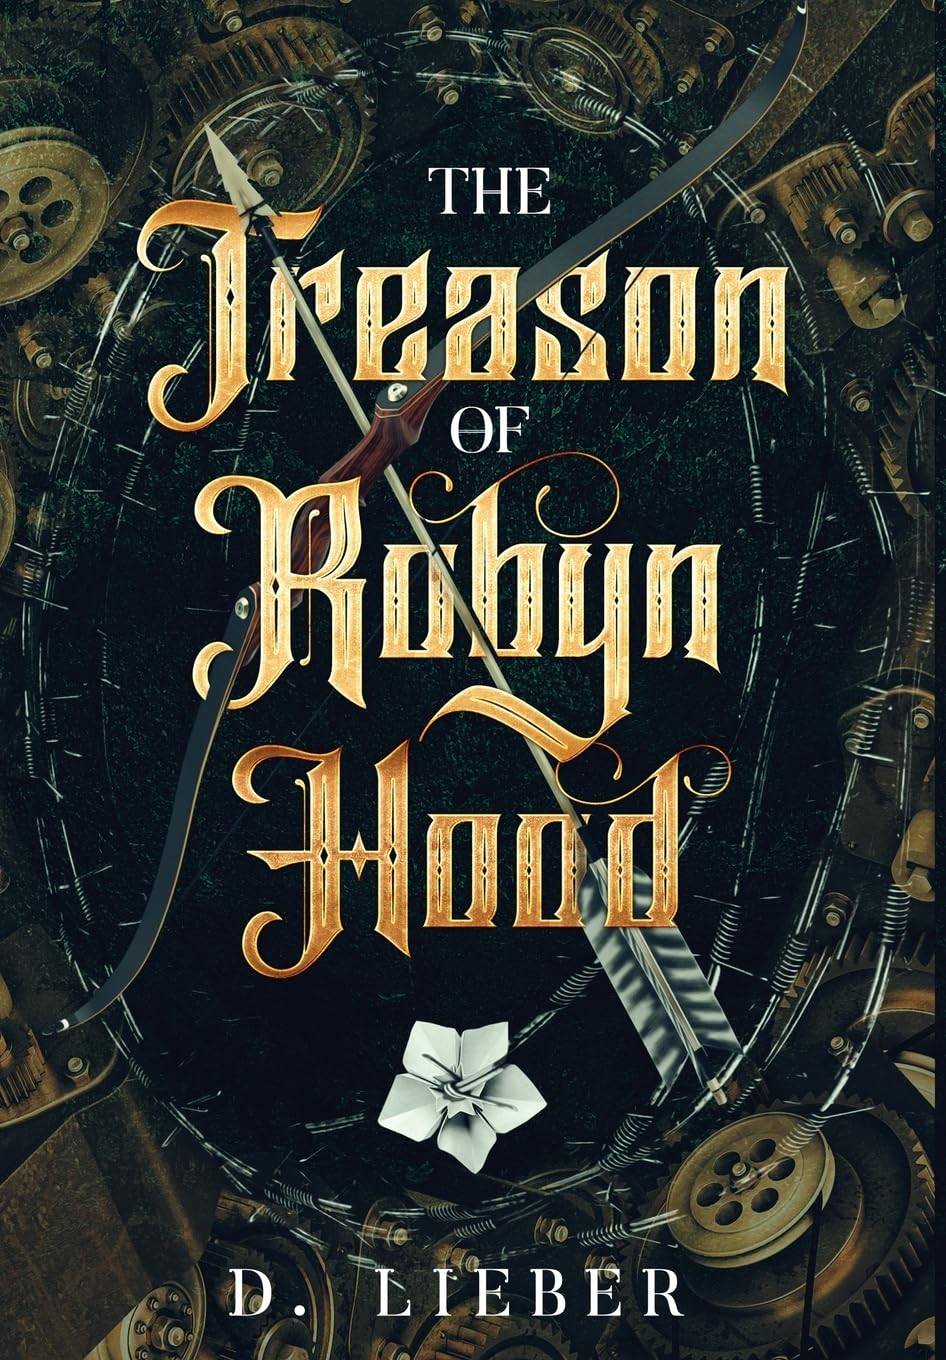 The Treason of Robyn Hood